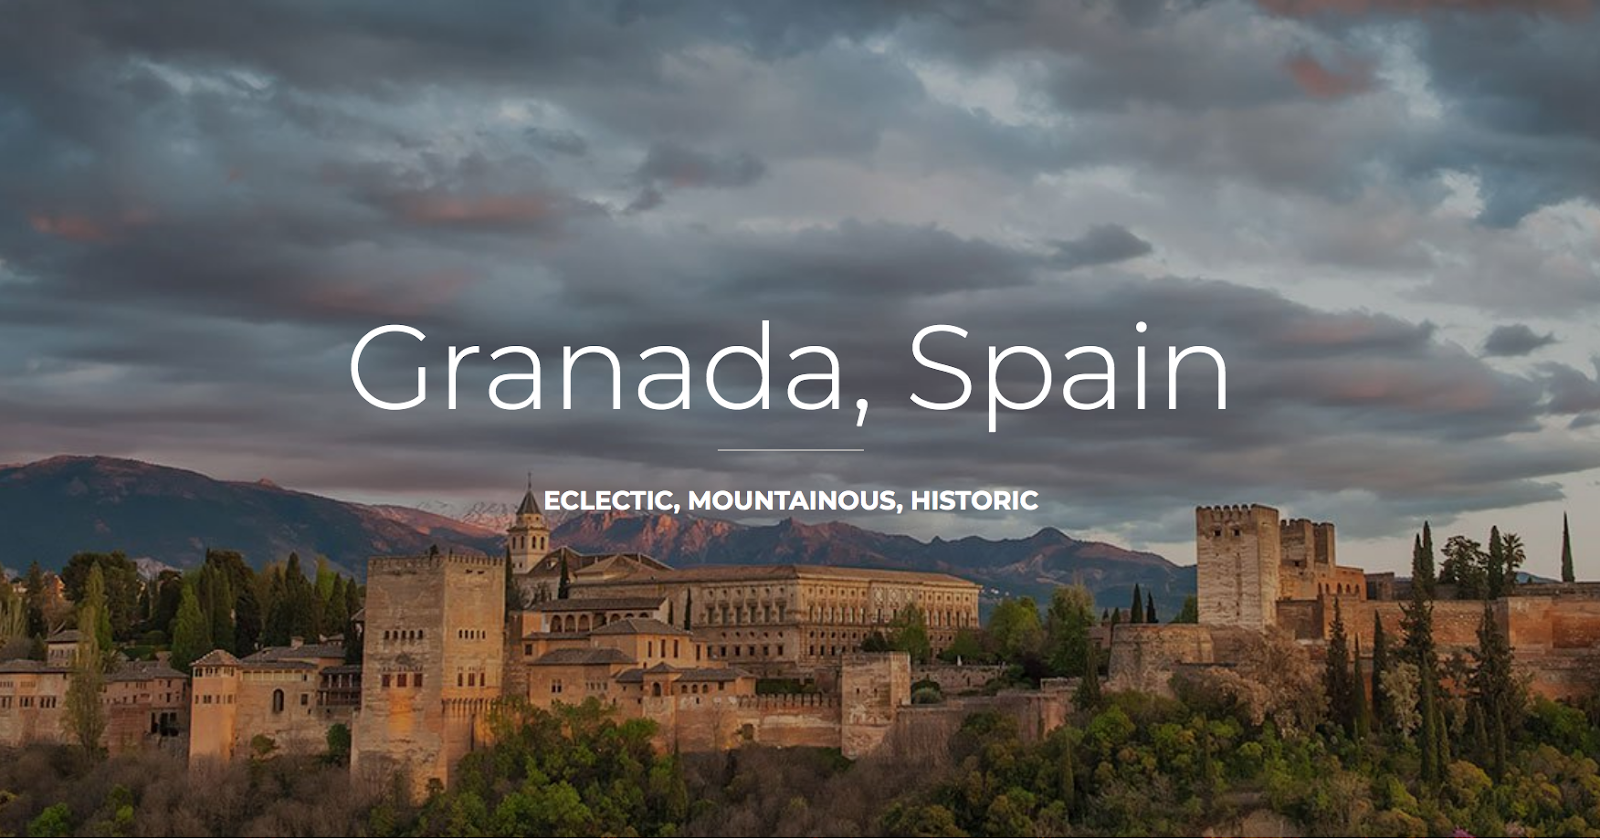 Granada, Spain, Eclectic, Mountainous, Historic